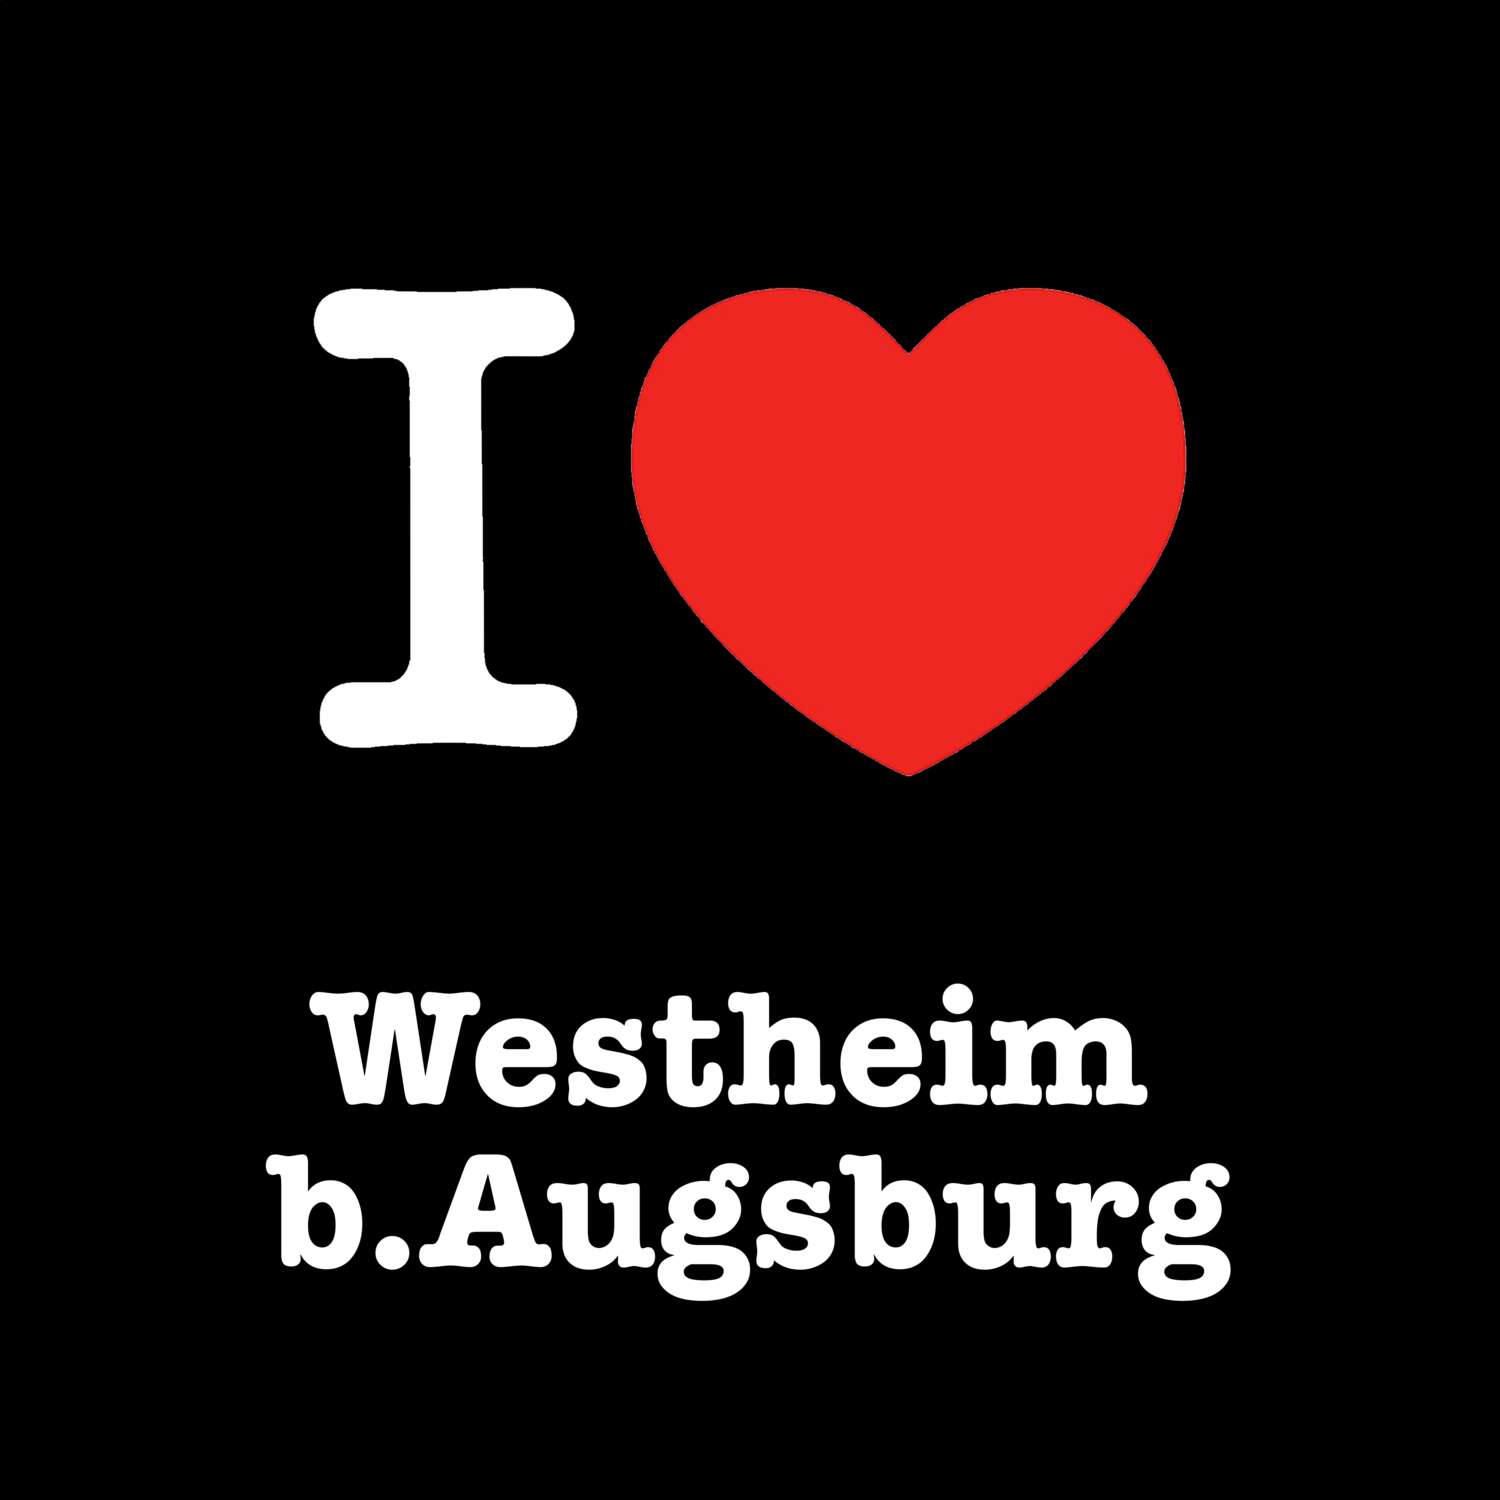 Westheim b.Augsburg T-Shirt »I love«